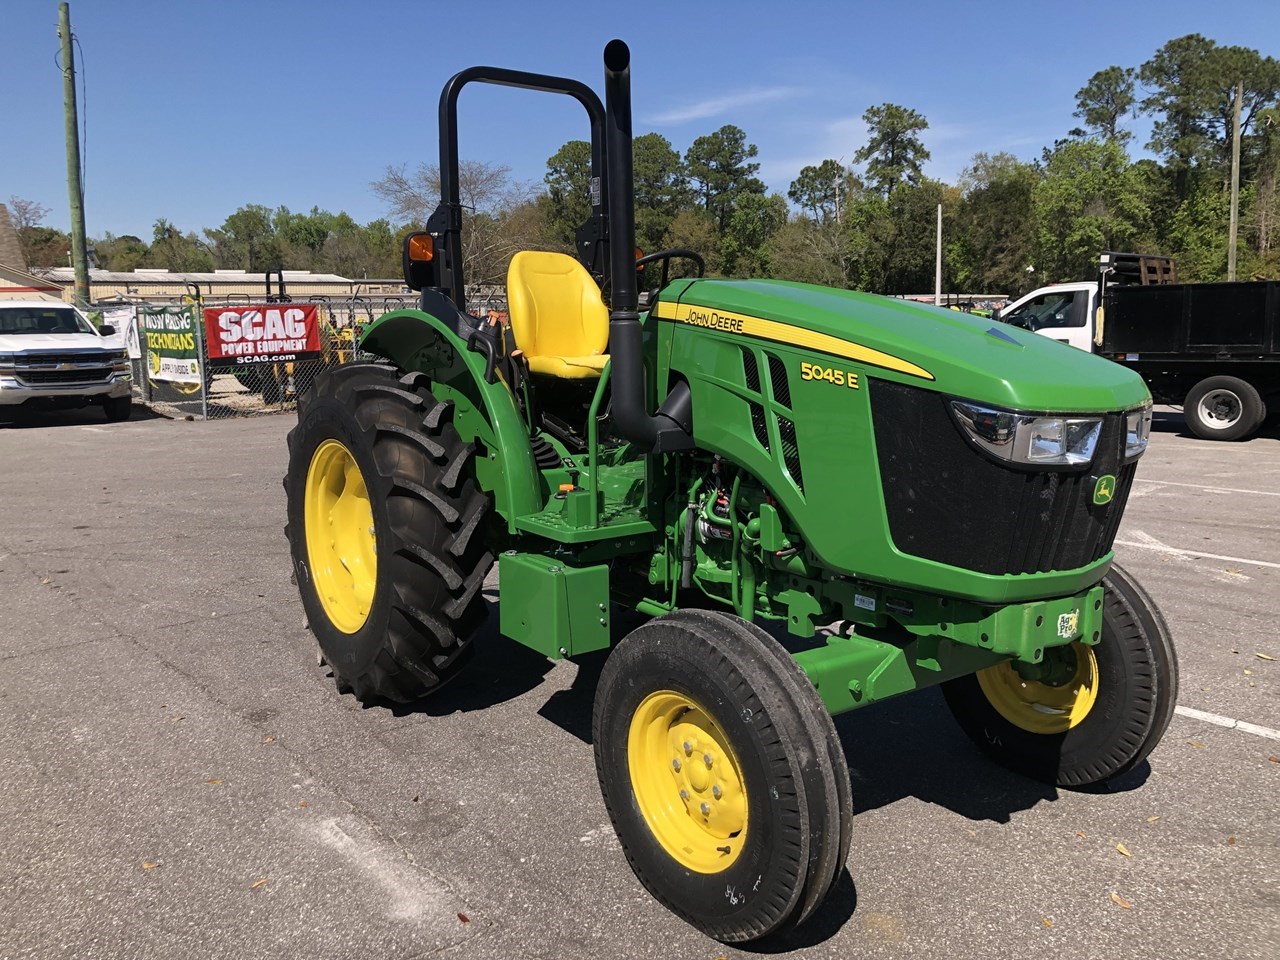 2022 John Deere 5045e Compact Utility Tractor Ventejacksonville Florida 6121